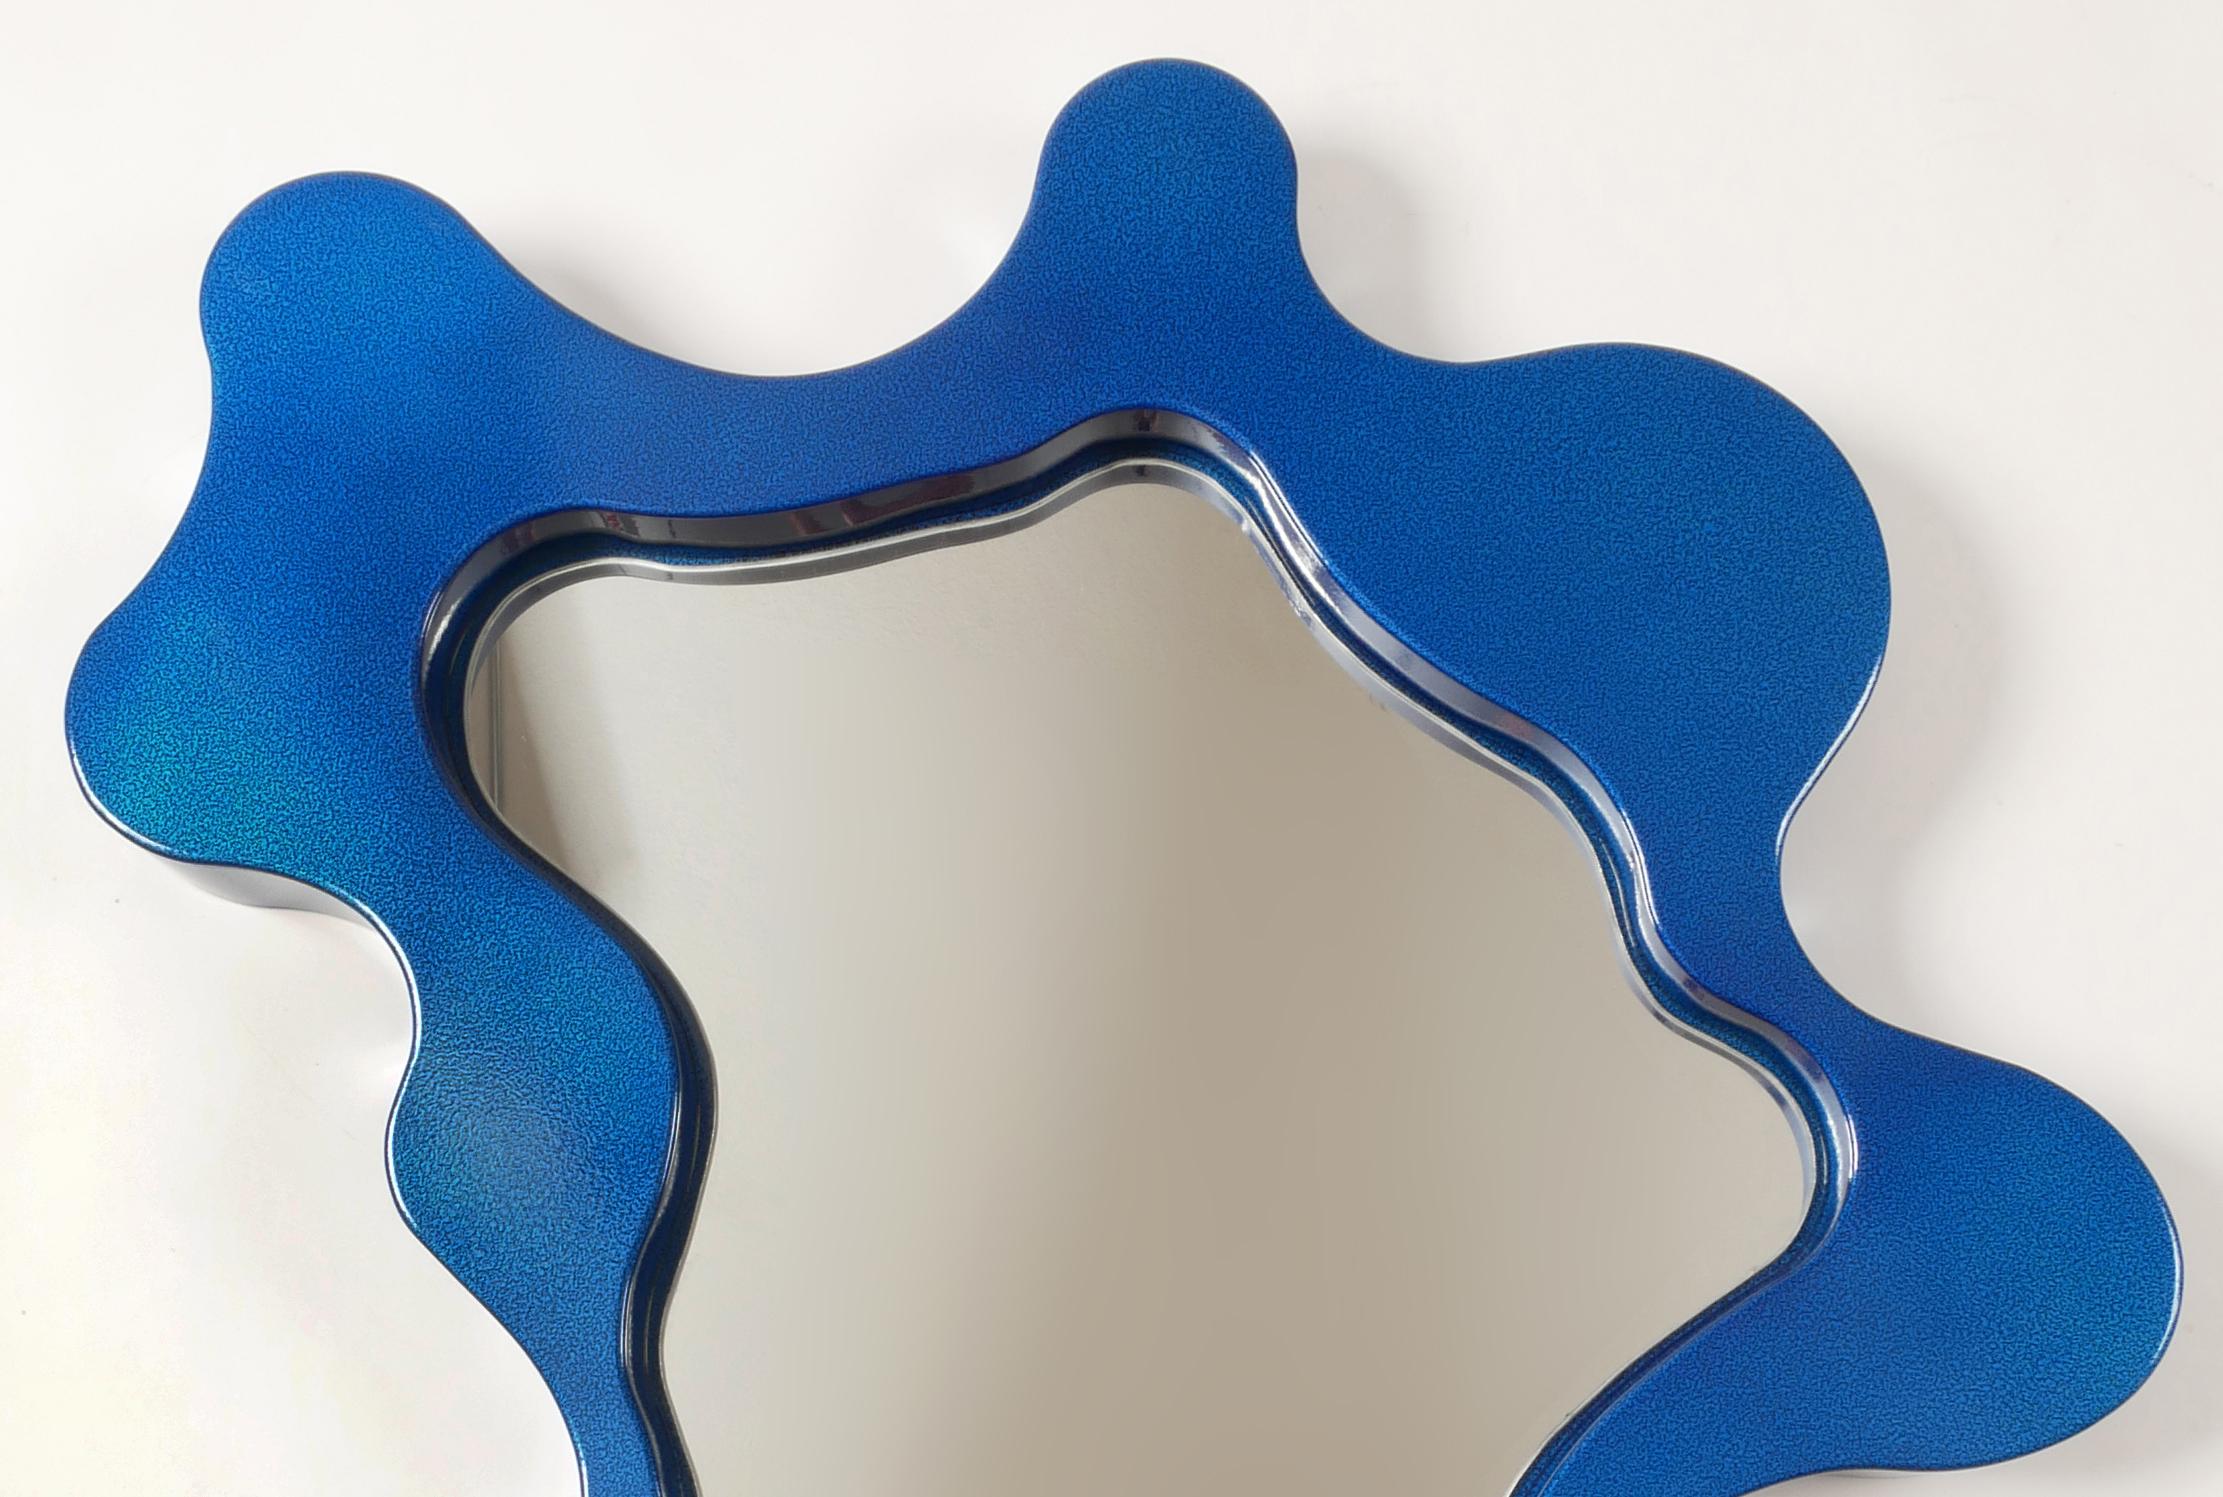 Bert Furnari abstract free-form aluminum mirror, bespoke blue finish

Offered for sale is a Bert Furnari studio free form powder-coated aluminum mirror with Bert's signature 